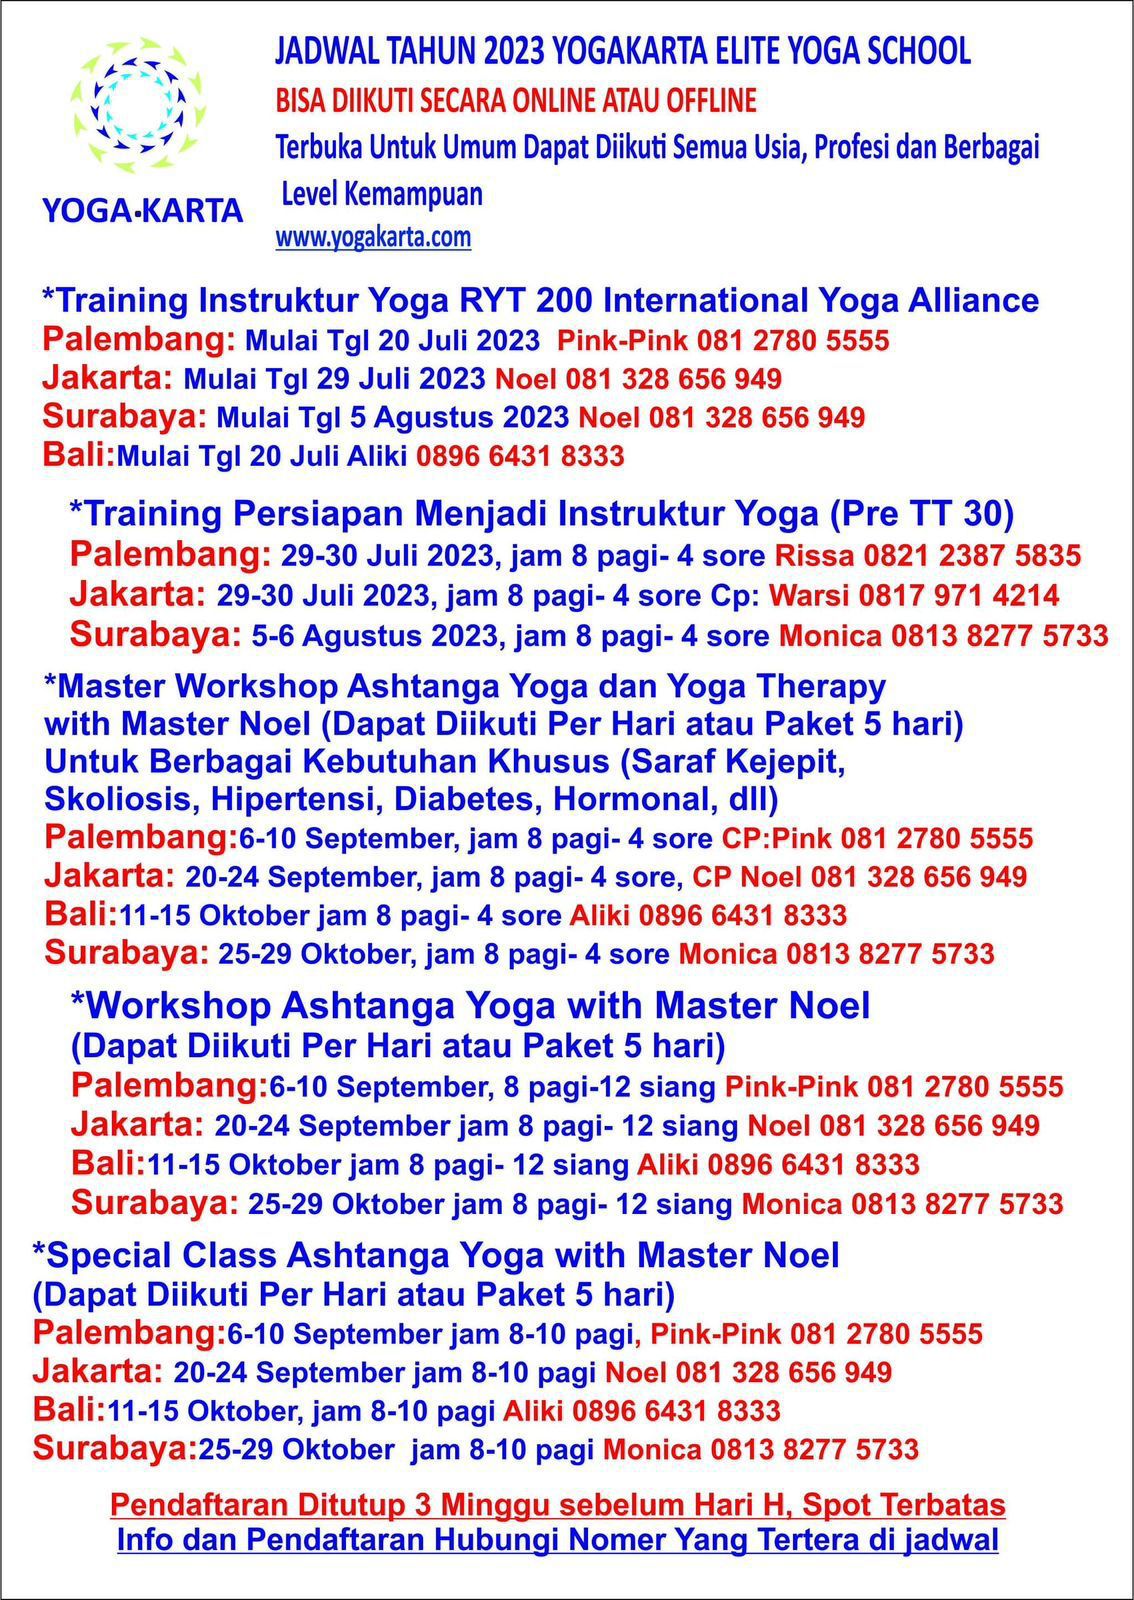 Jadwal Keseluruhan Yogakarta Elite Yoga School 2023